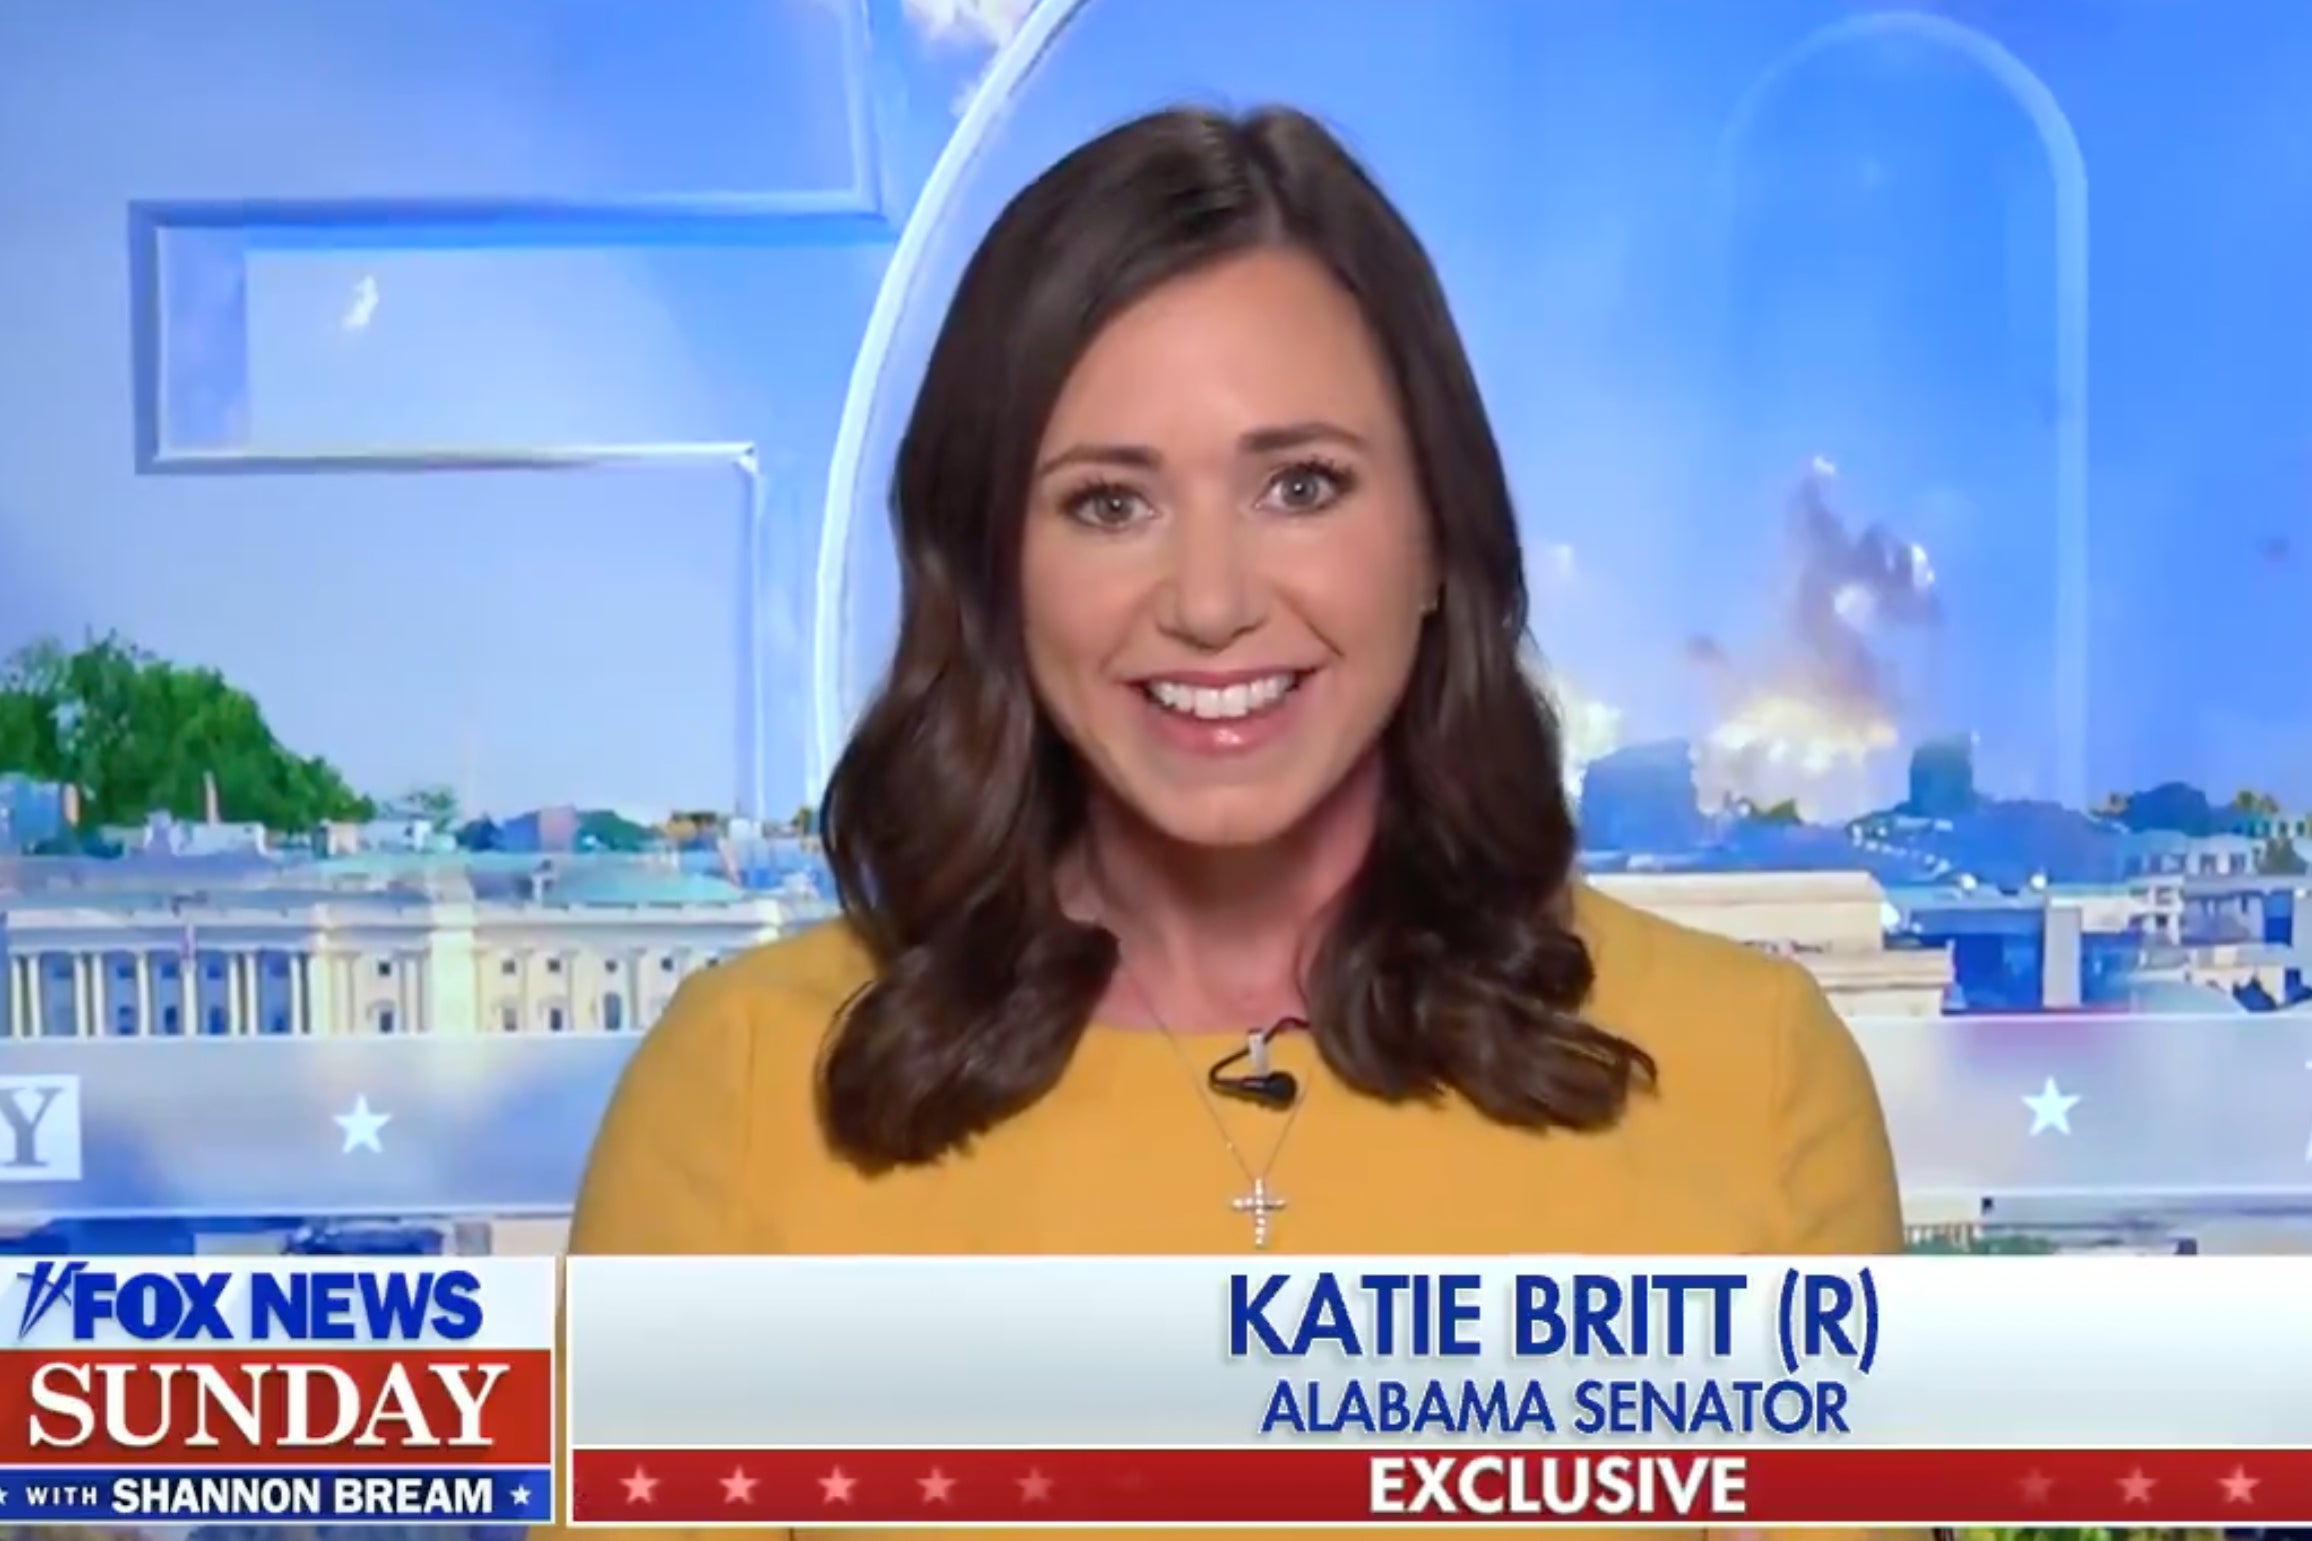 Katie Britt, the Alabama Senator, joined Fox News Sunday to defend herself against criticisms of her SOTU rebuttal